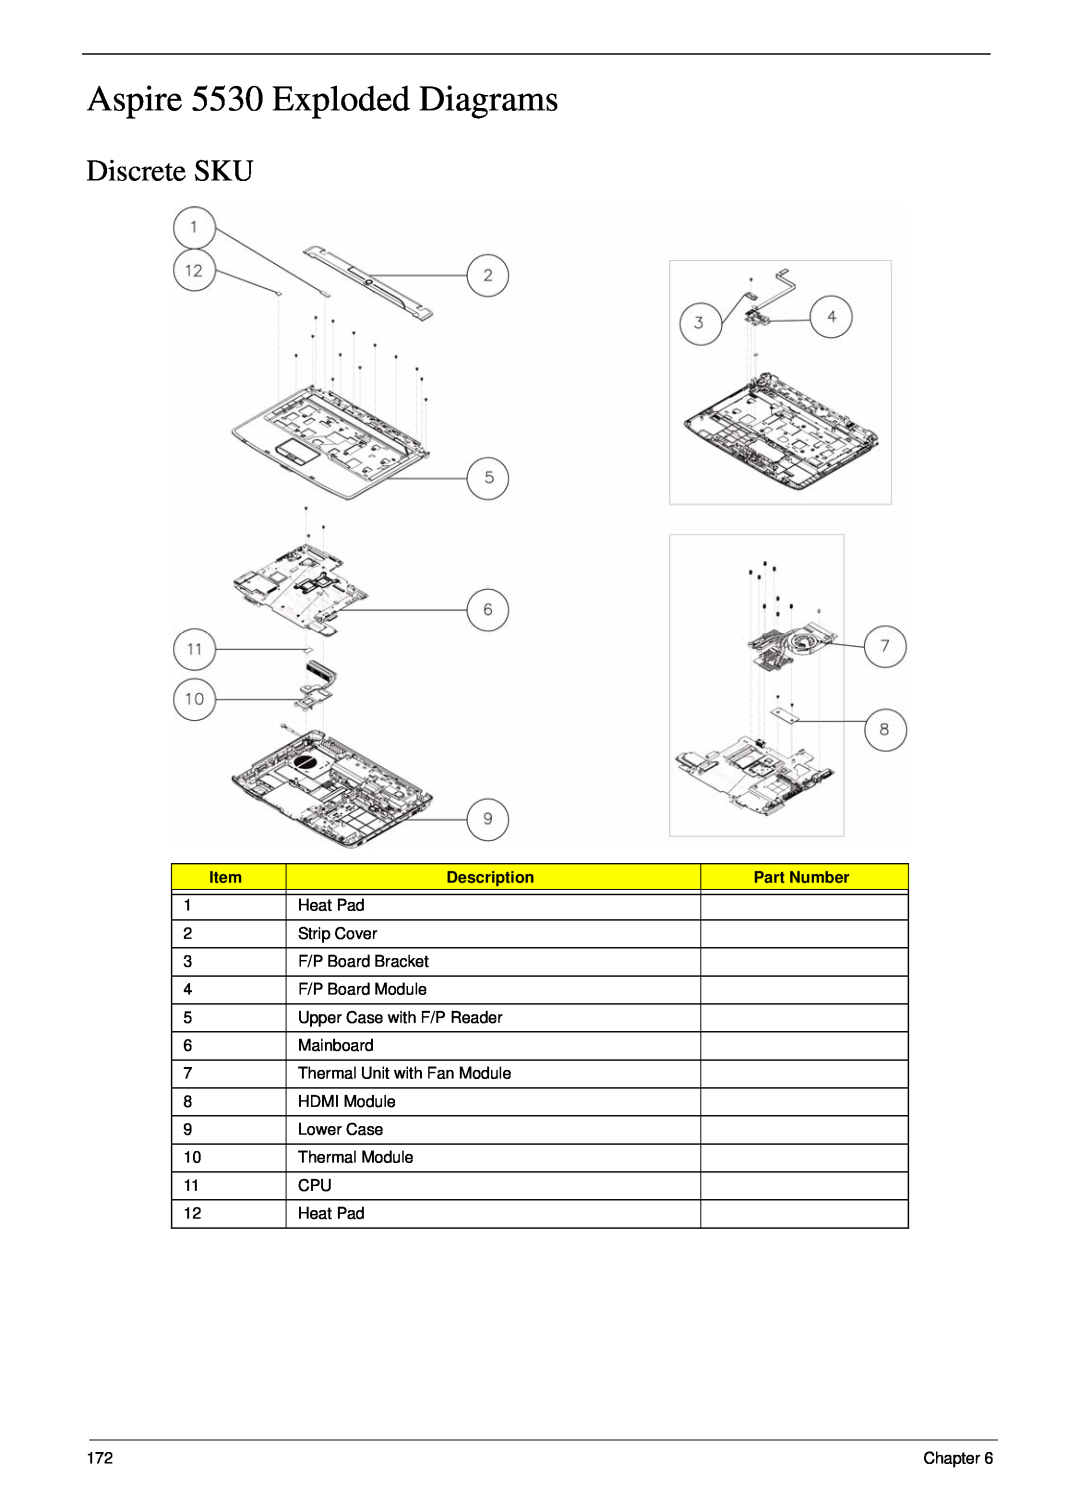 Acer 5530G manual Aspire 5530 Exploded Diagrams, Discrete SKU, Description, Part Number 